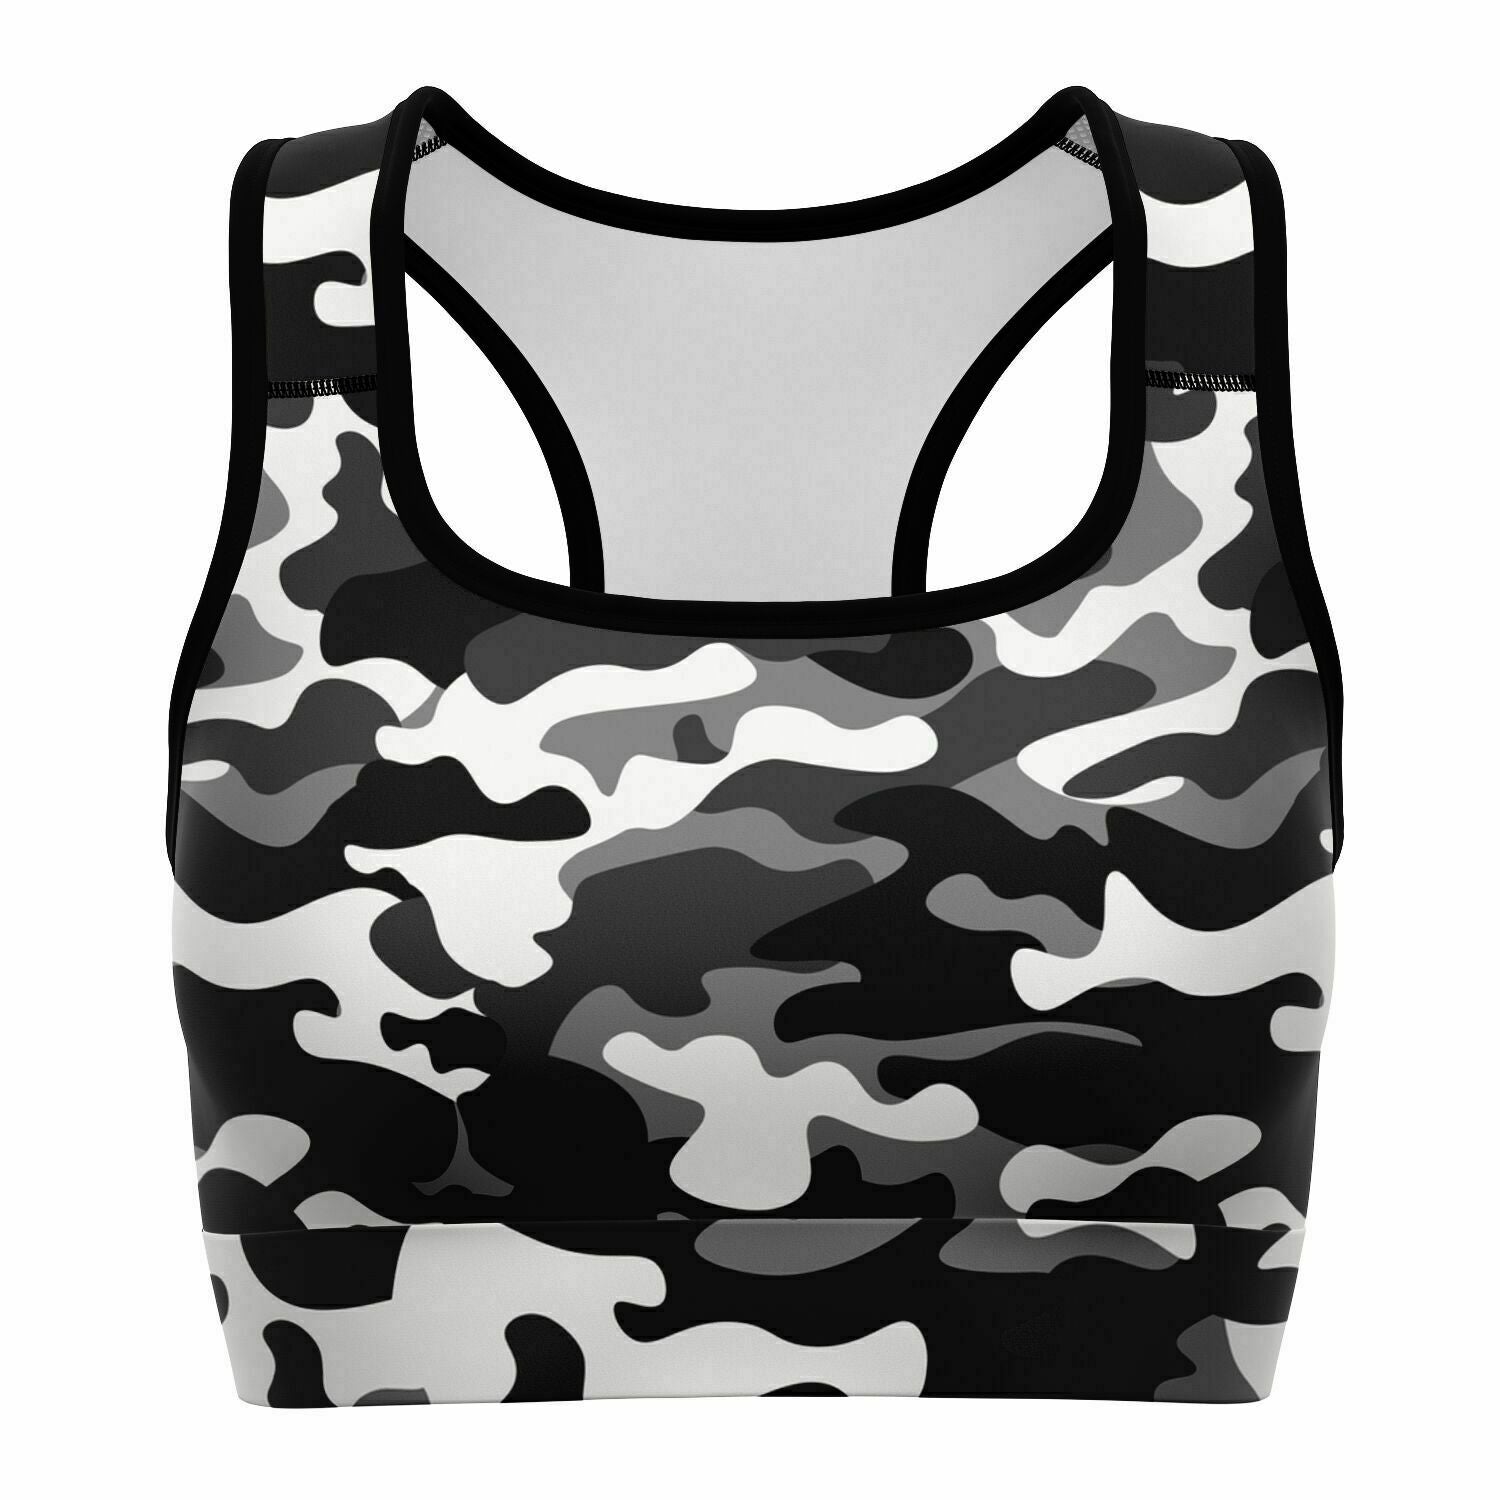 Women's Urban Jungle Black White Camouflage Athletic Sports Bra